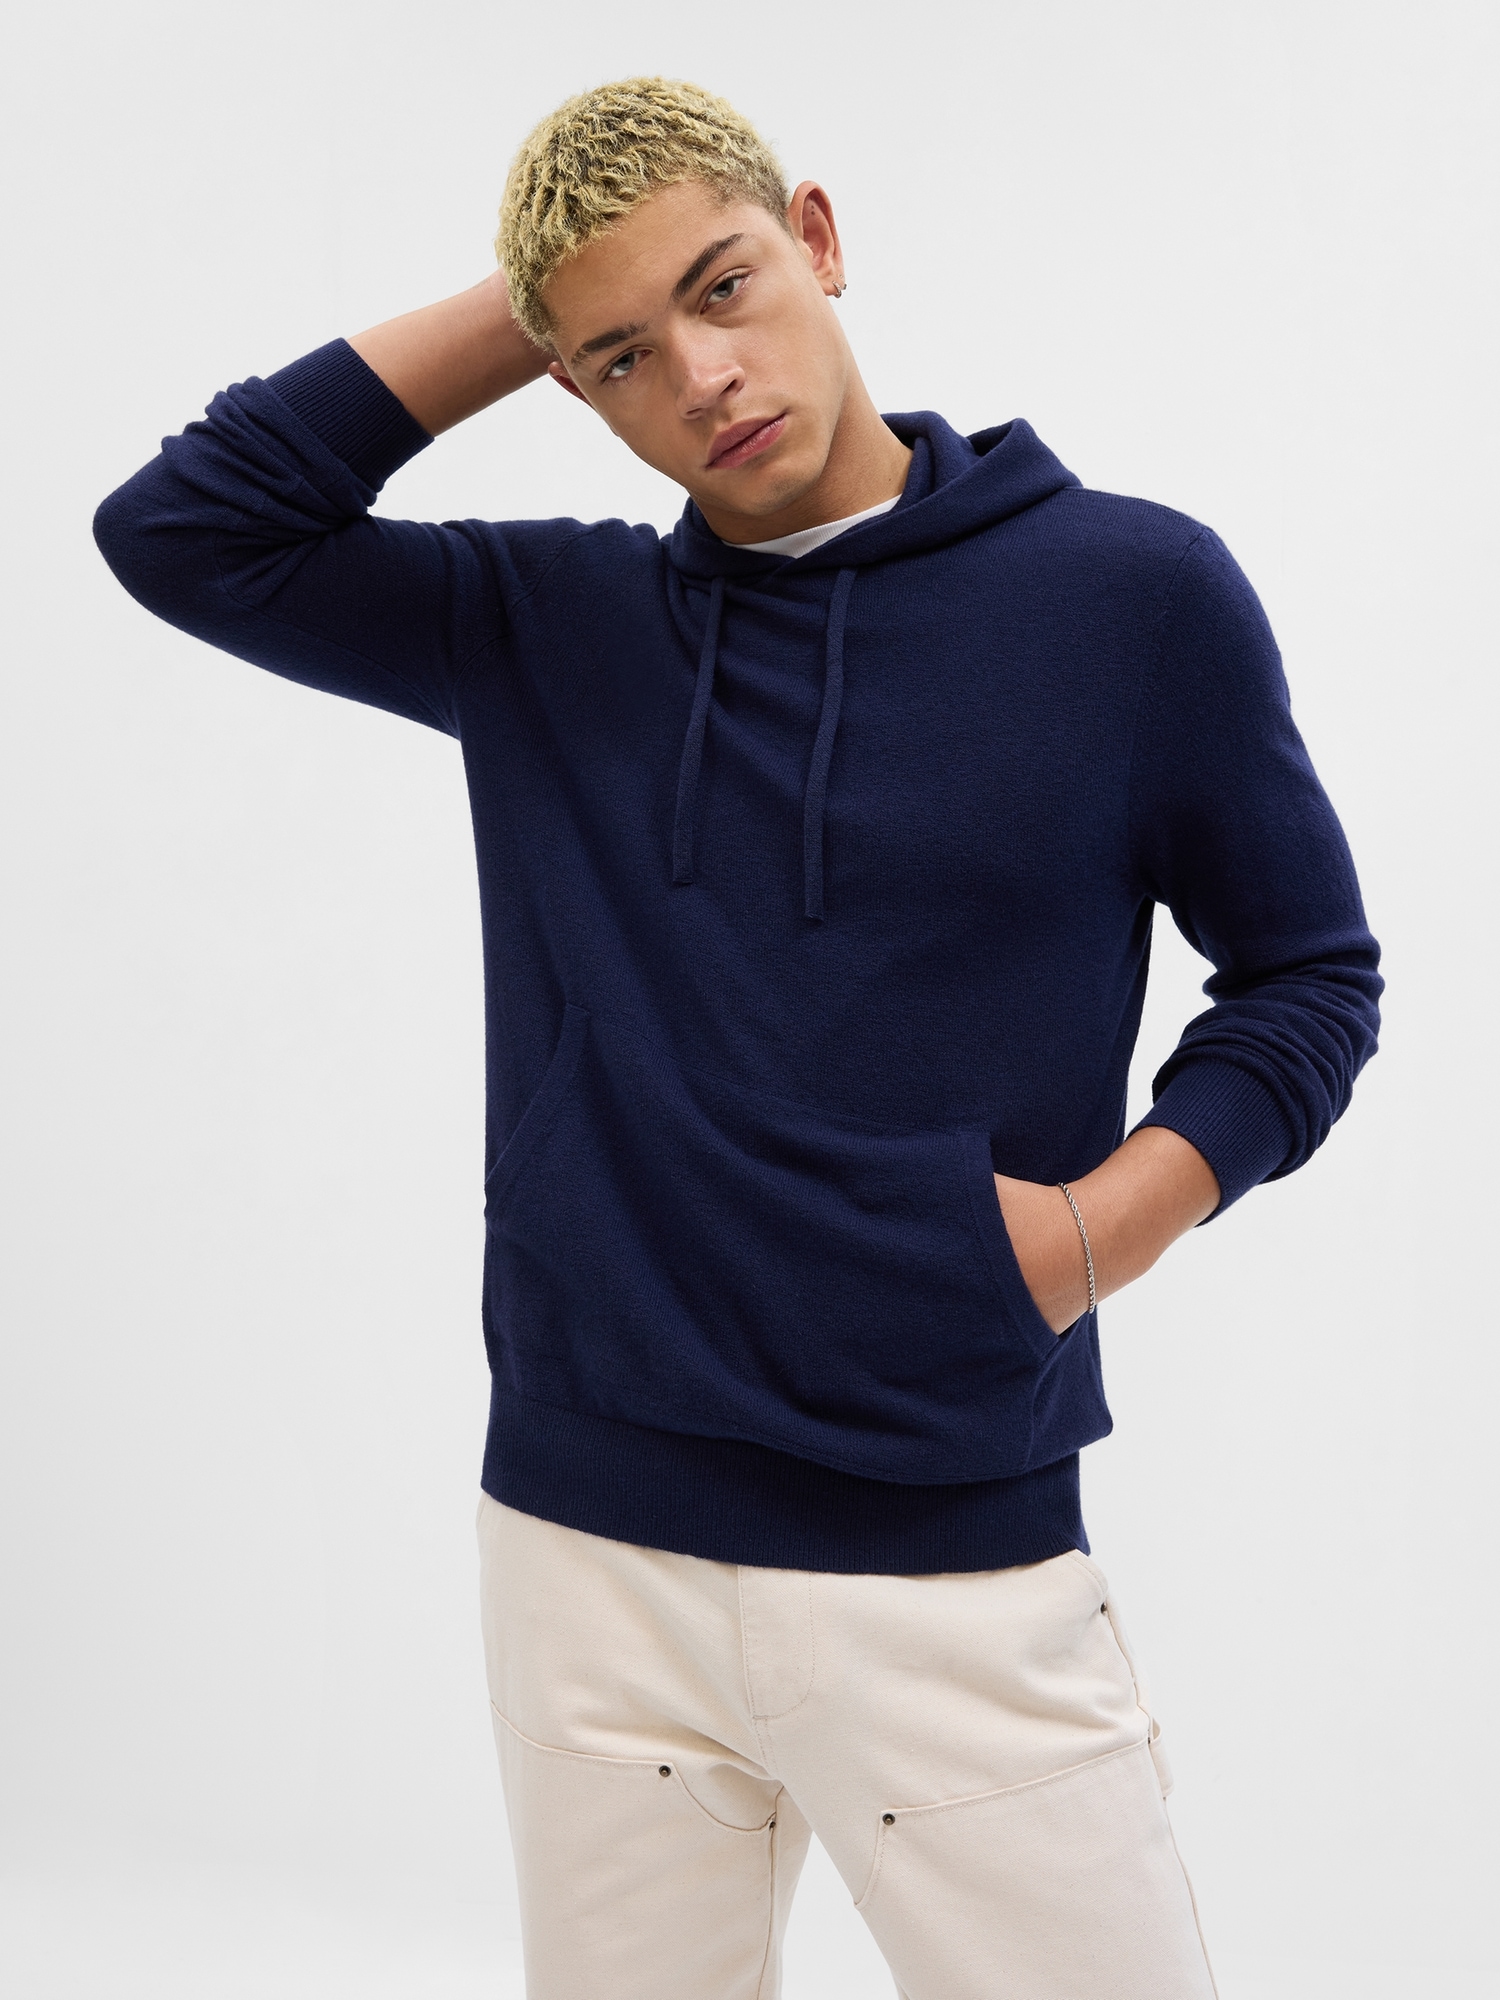 CashSoft Sweater Hoodie | Gap